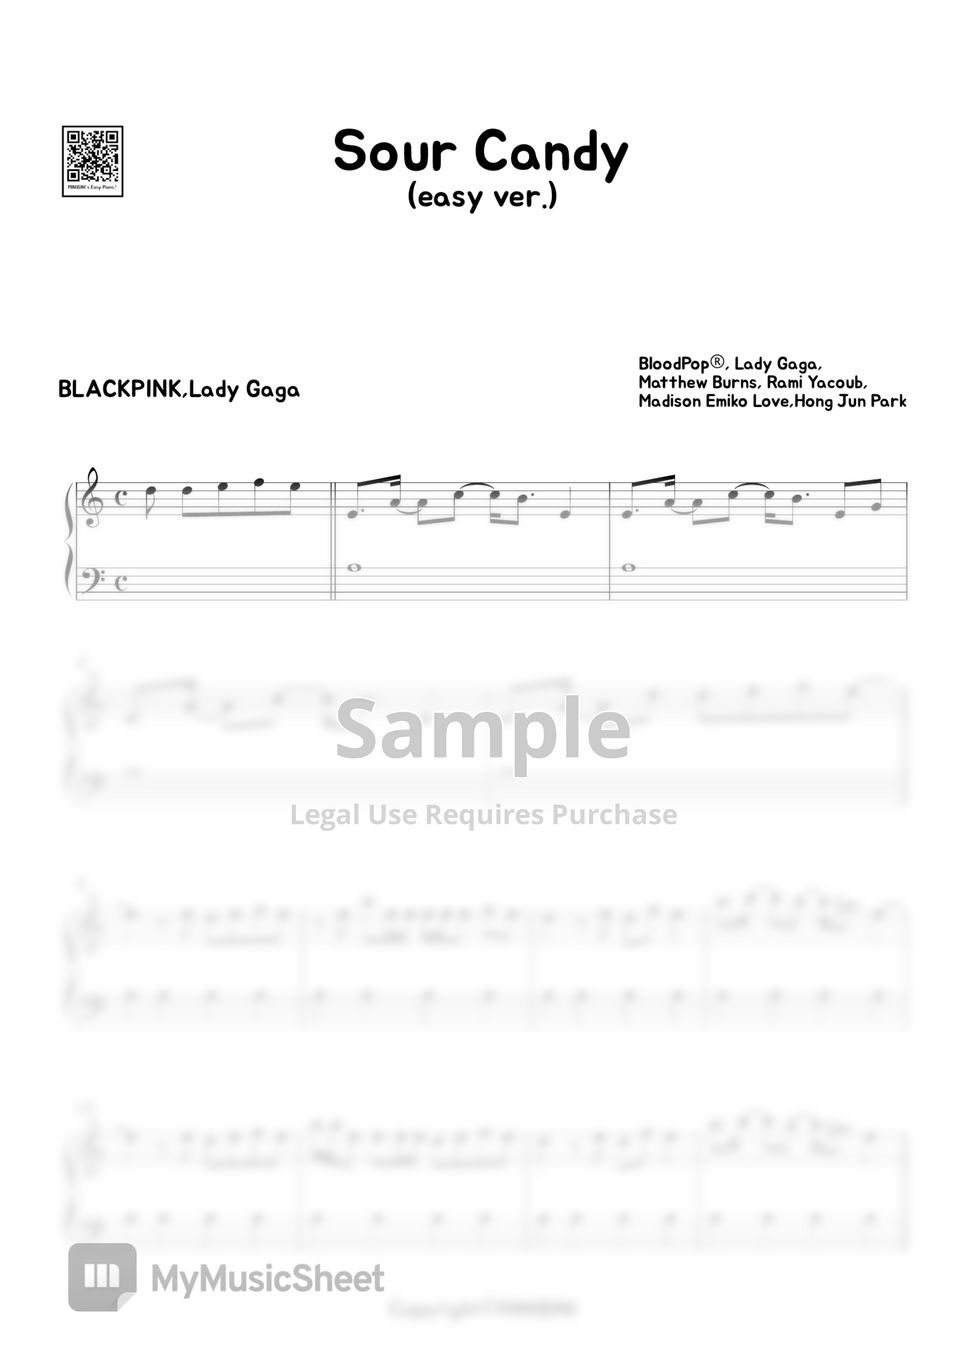 Lady Gaga X BLACKPINK - SOUR CANDY (Easy Version) by MINIBINI